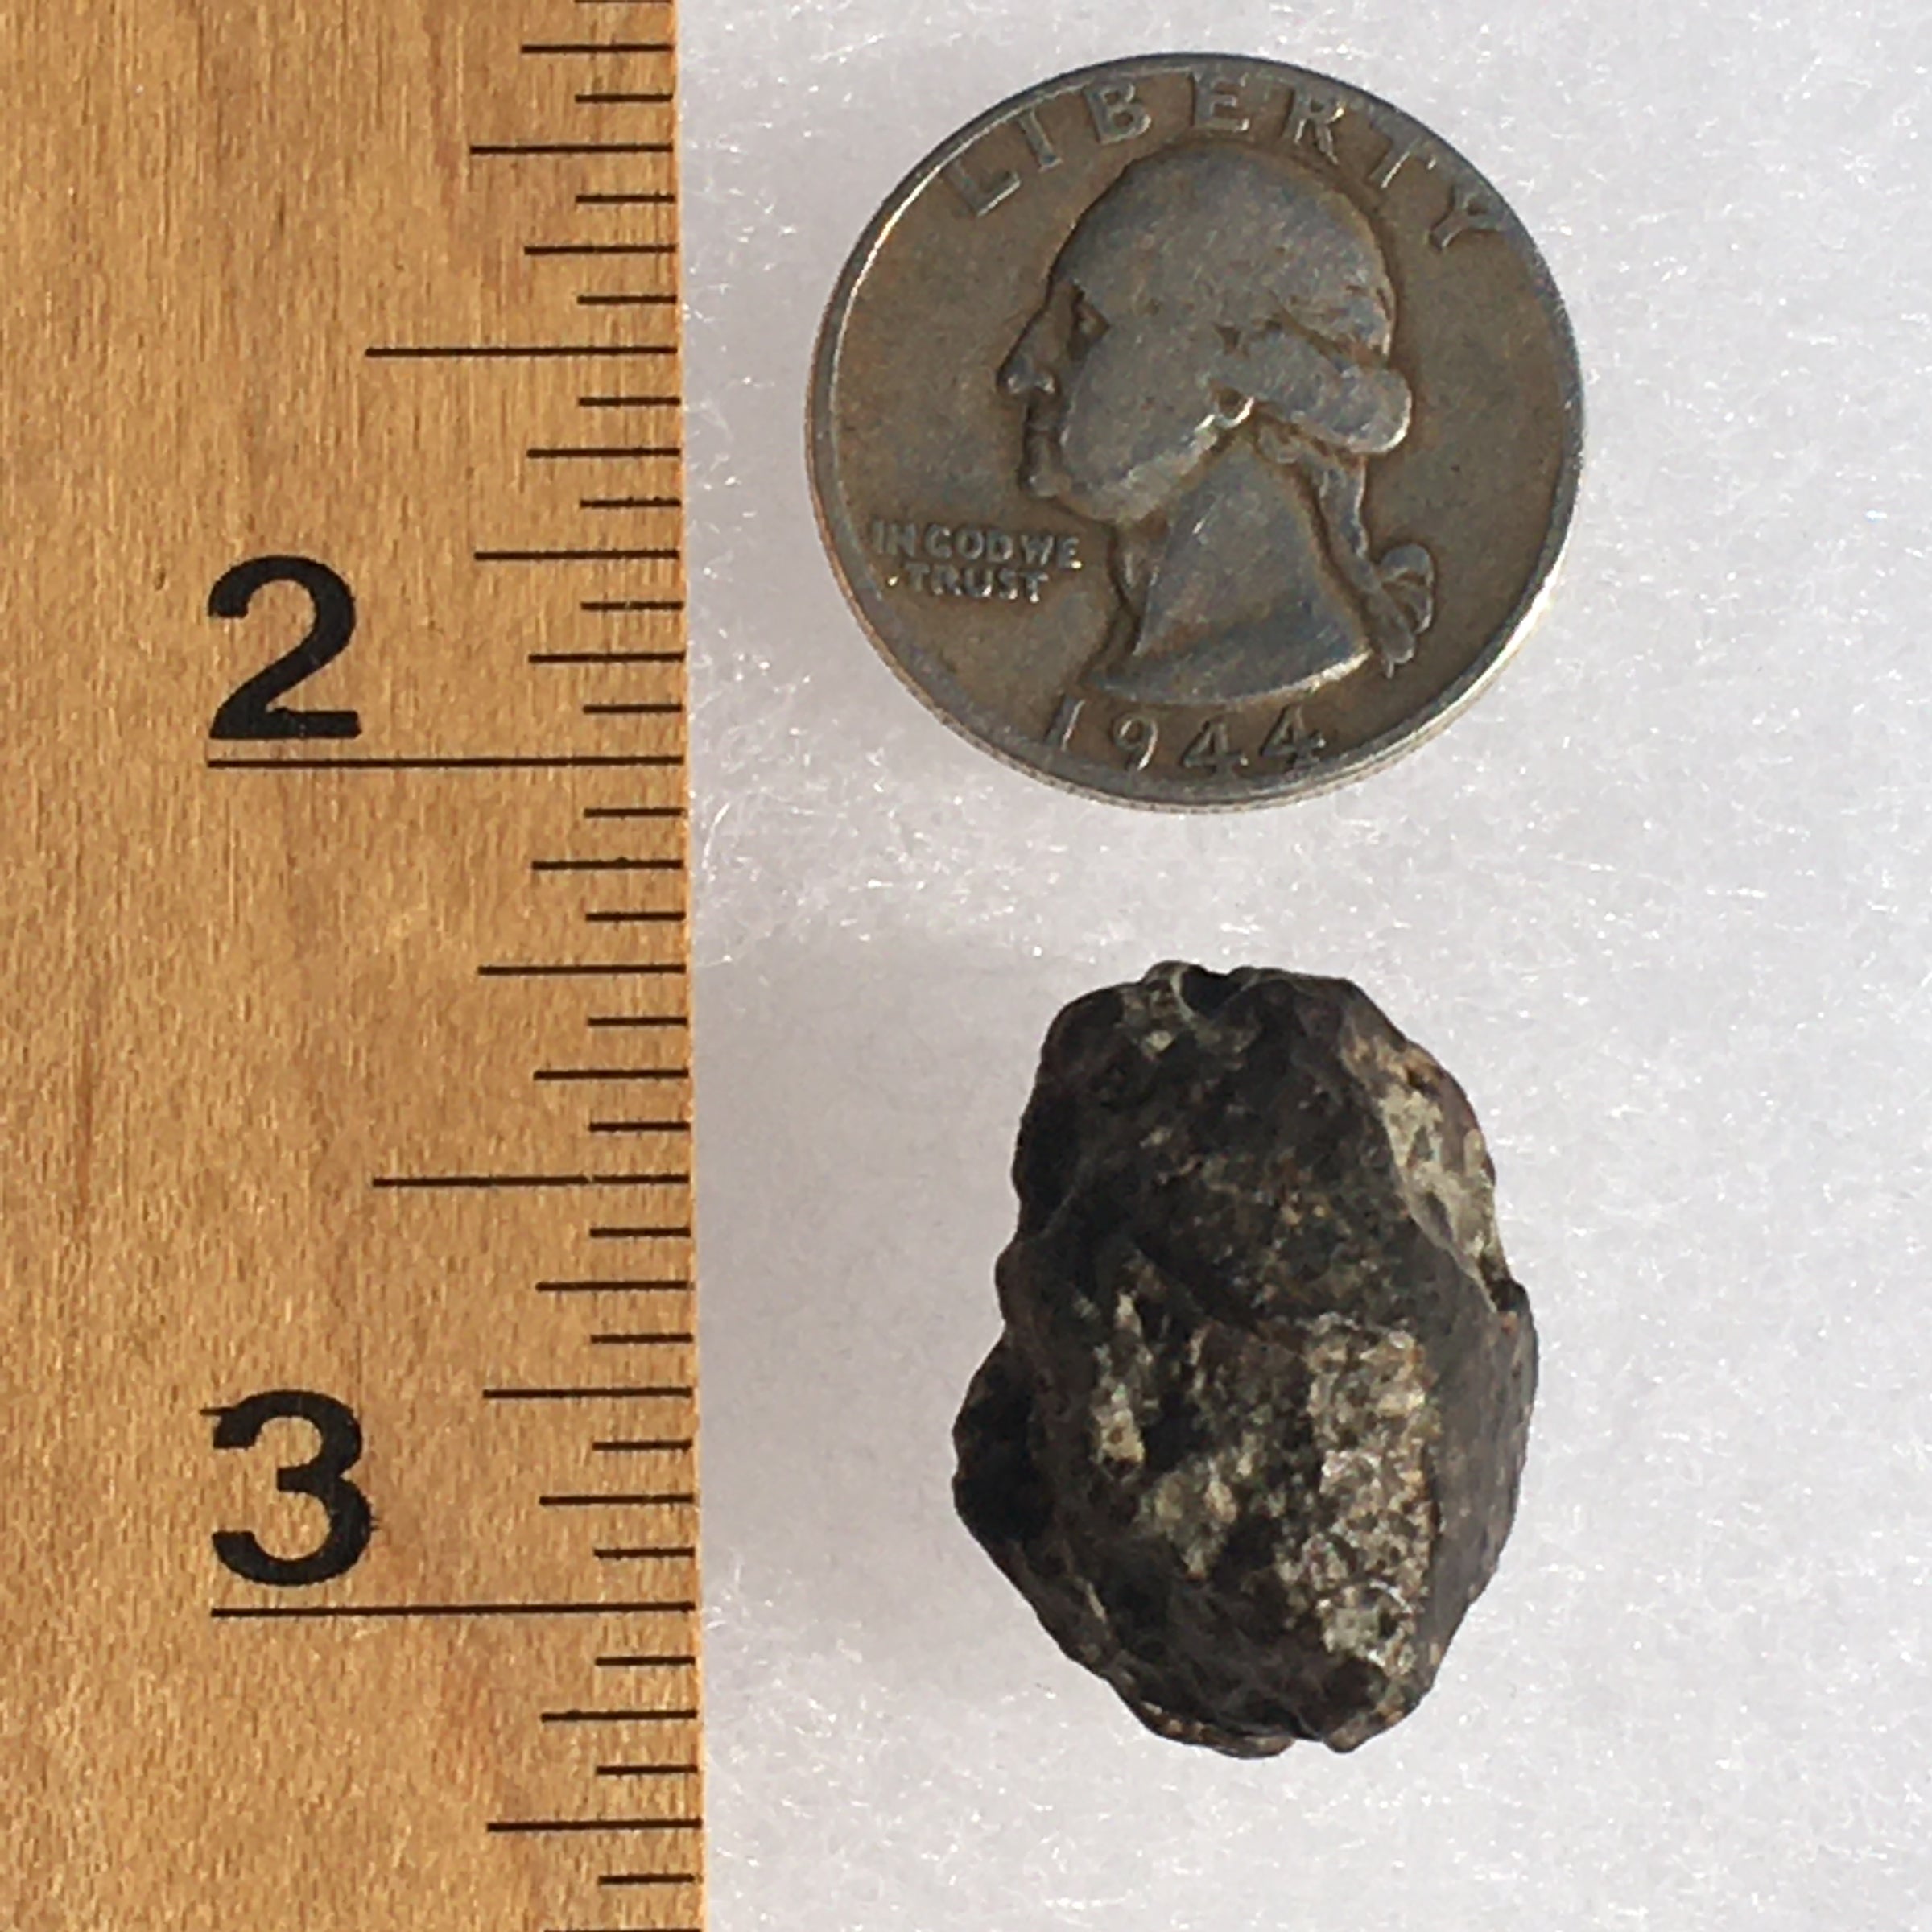 NWA 869 Meteorite Chondrite 9.1 grams-Moldavite Life